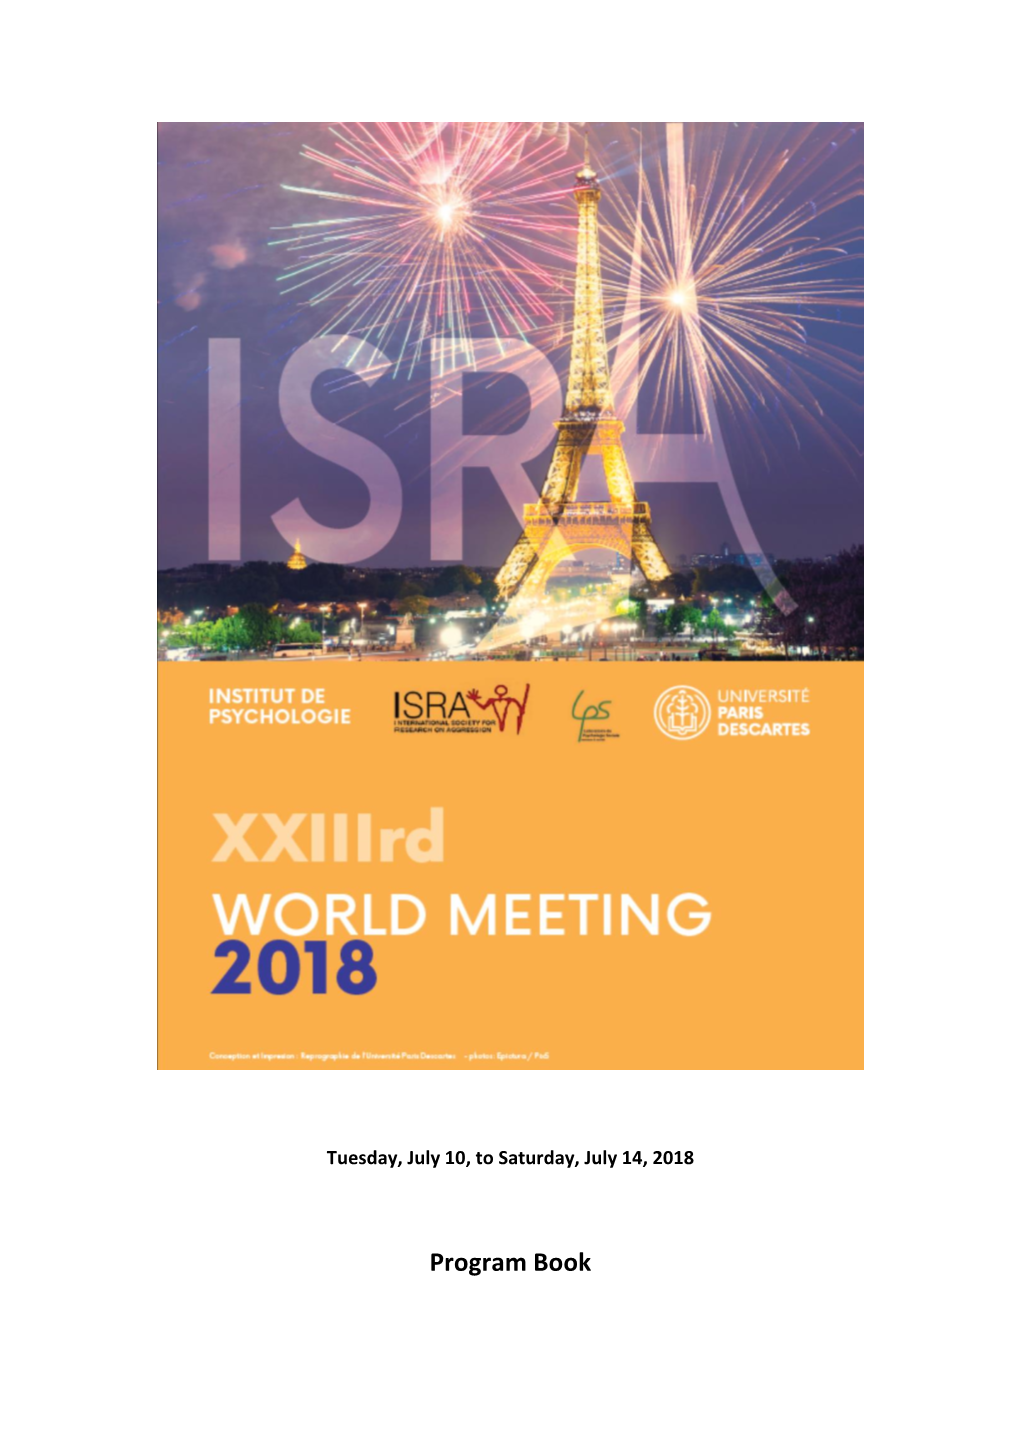 Program Book Program 2018 ISRA World Meeting 2